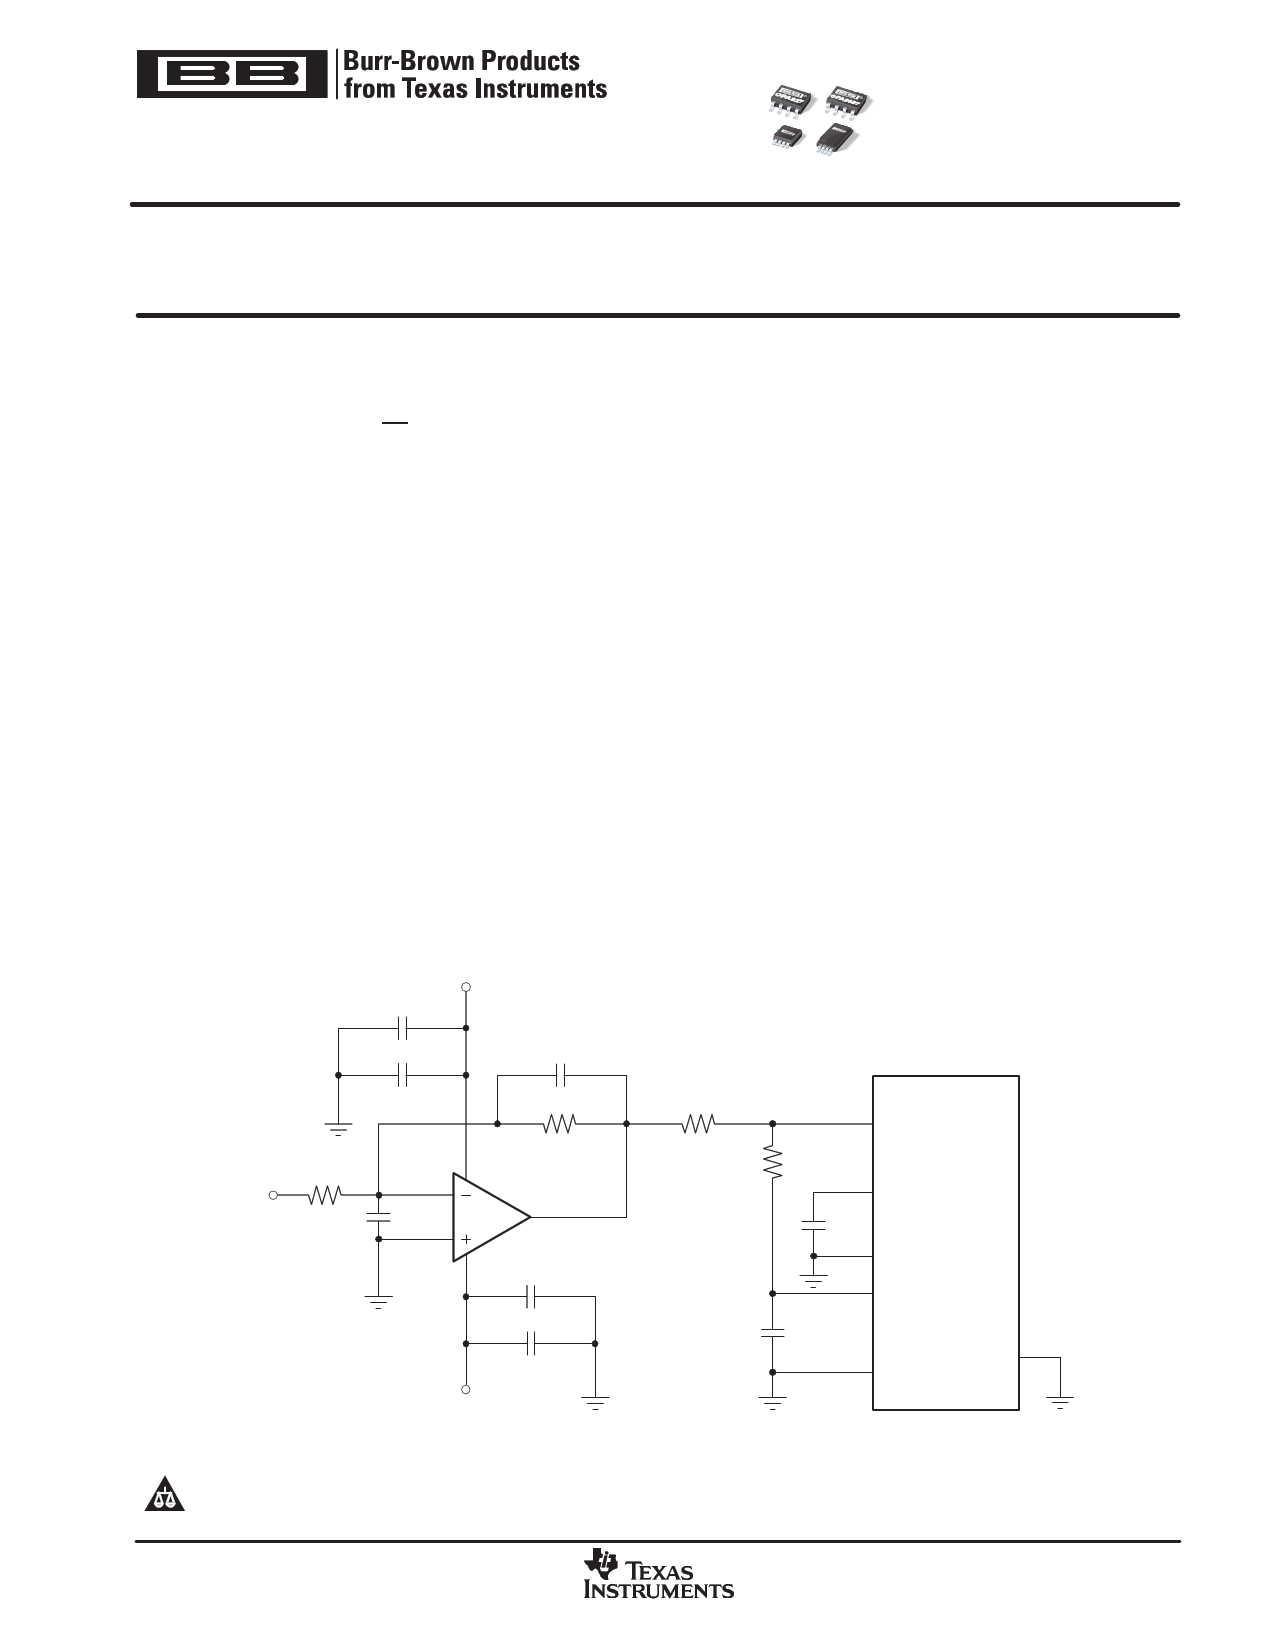 OPA827 datasheet, circuit